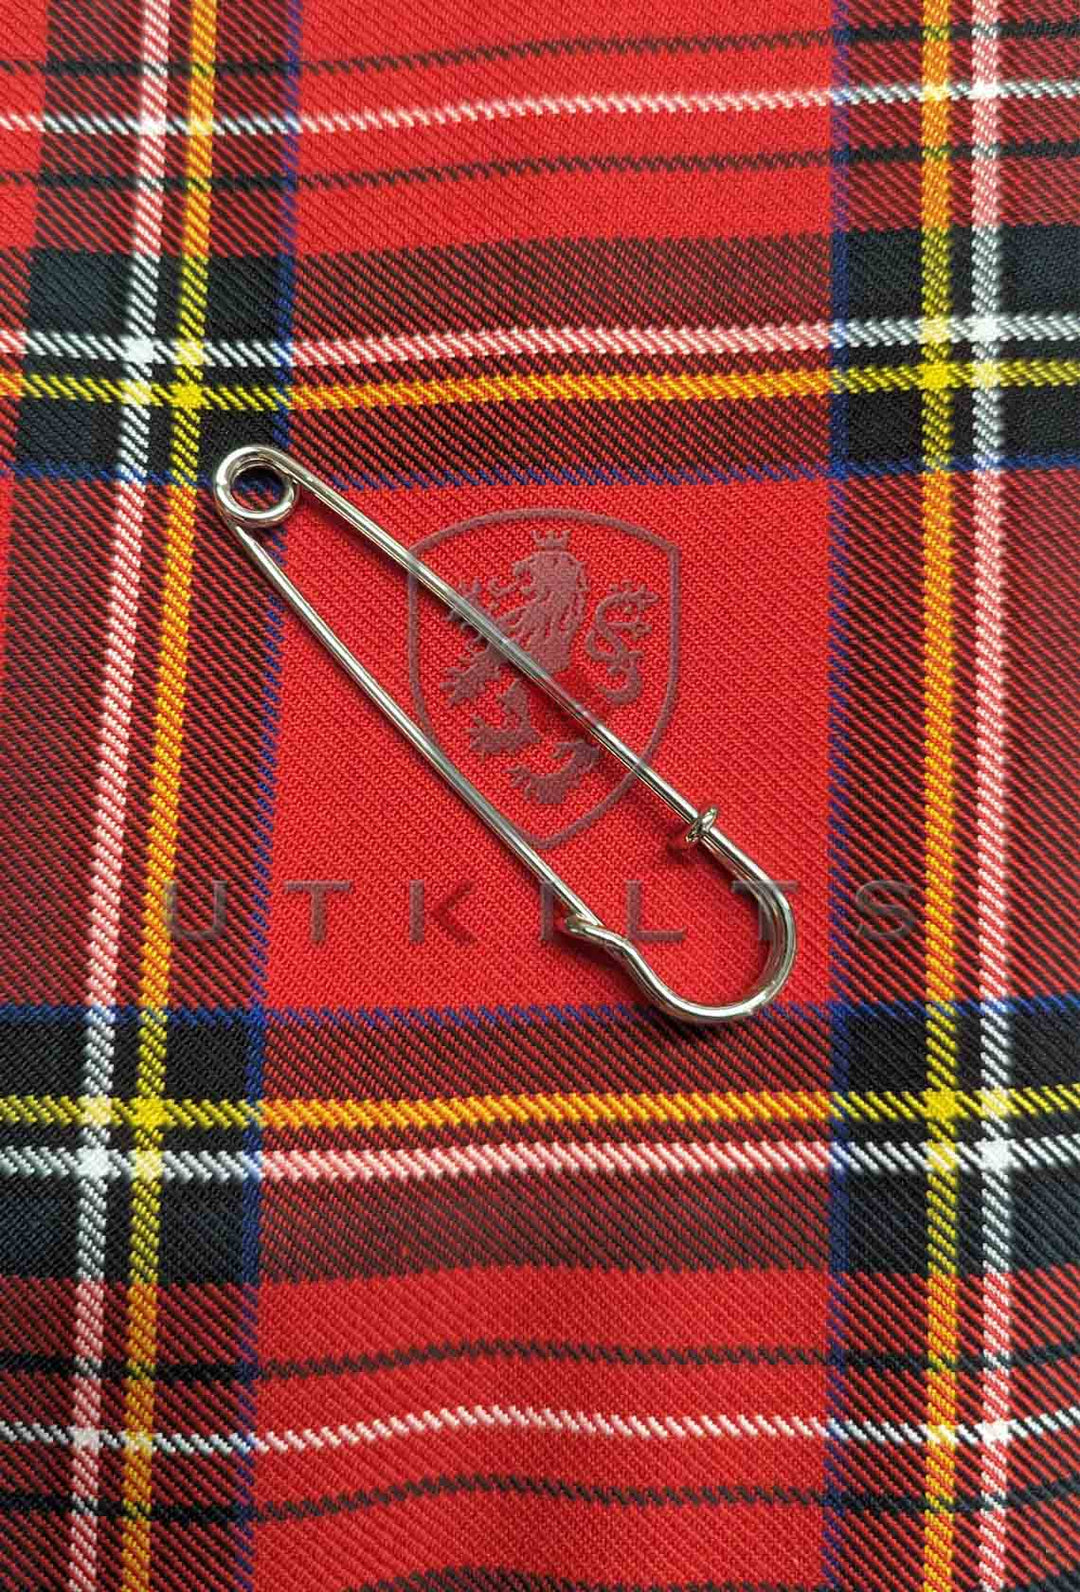 CLEARANCE! 5 yard Made in Scotland Royal Stewart PV Tartan Kilt - Includes free Military Style Safety Kilt Pin - 32x24